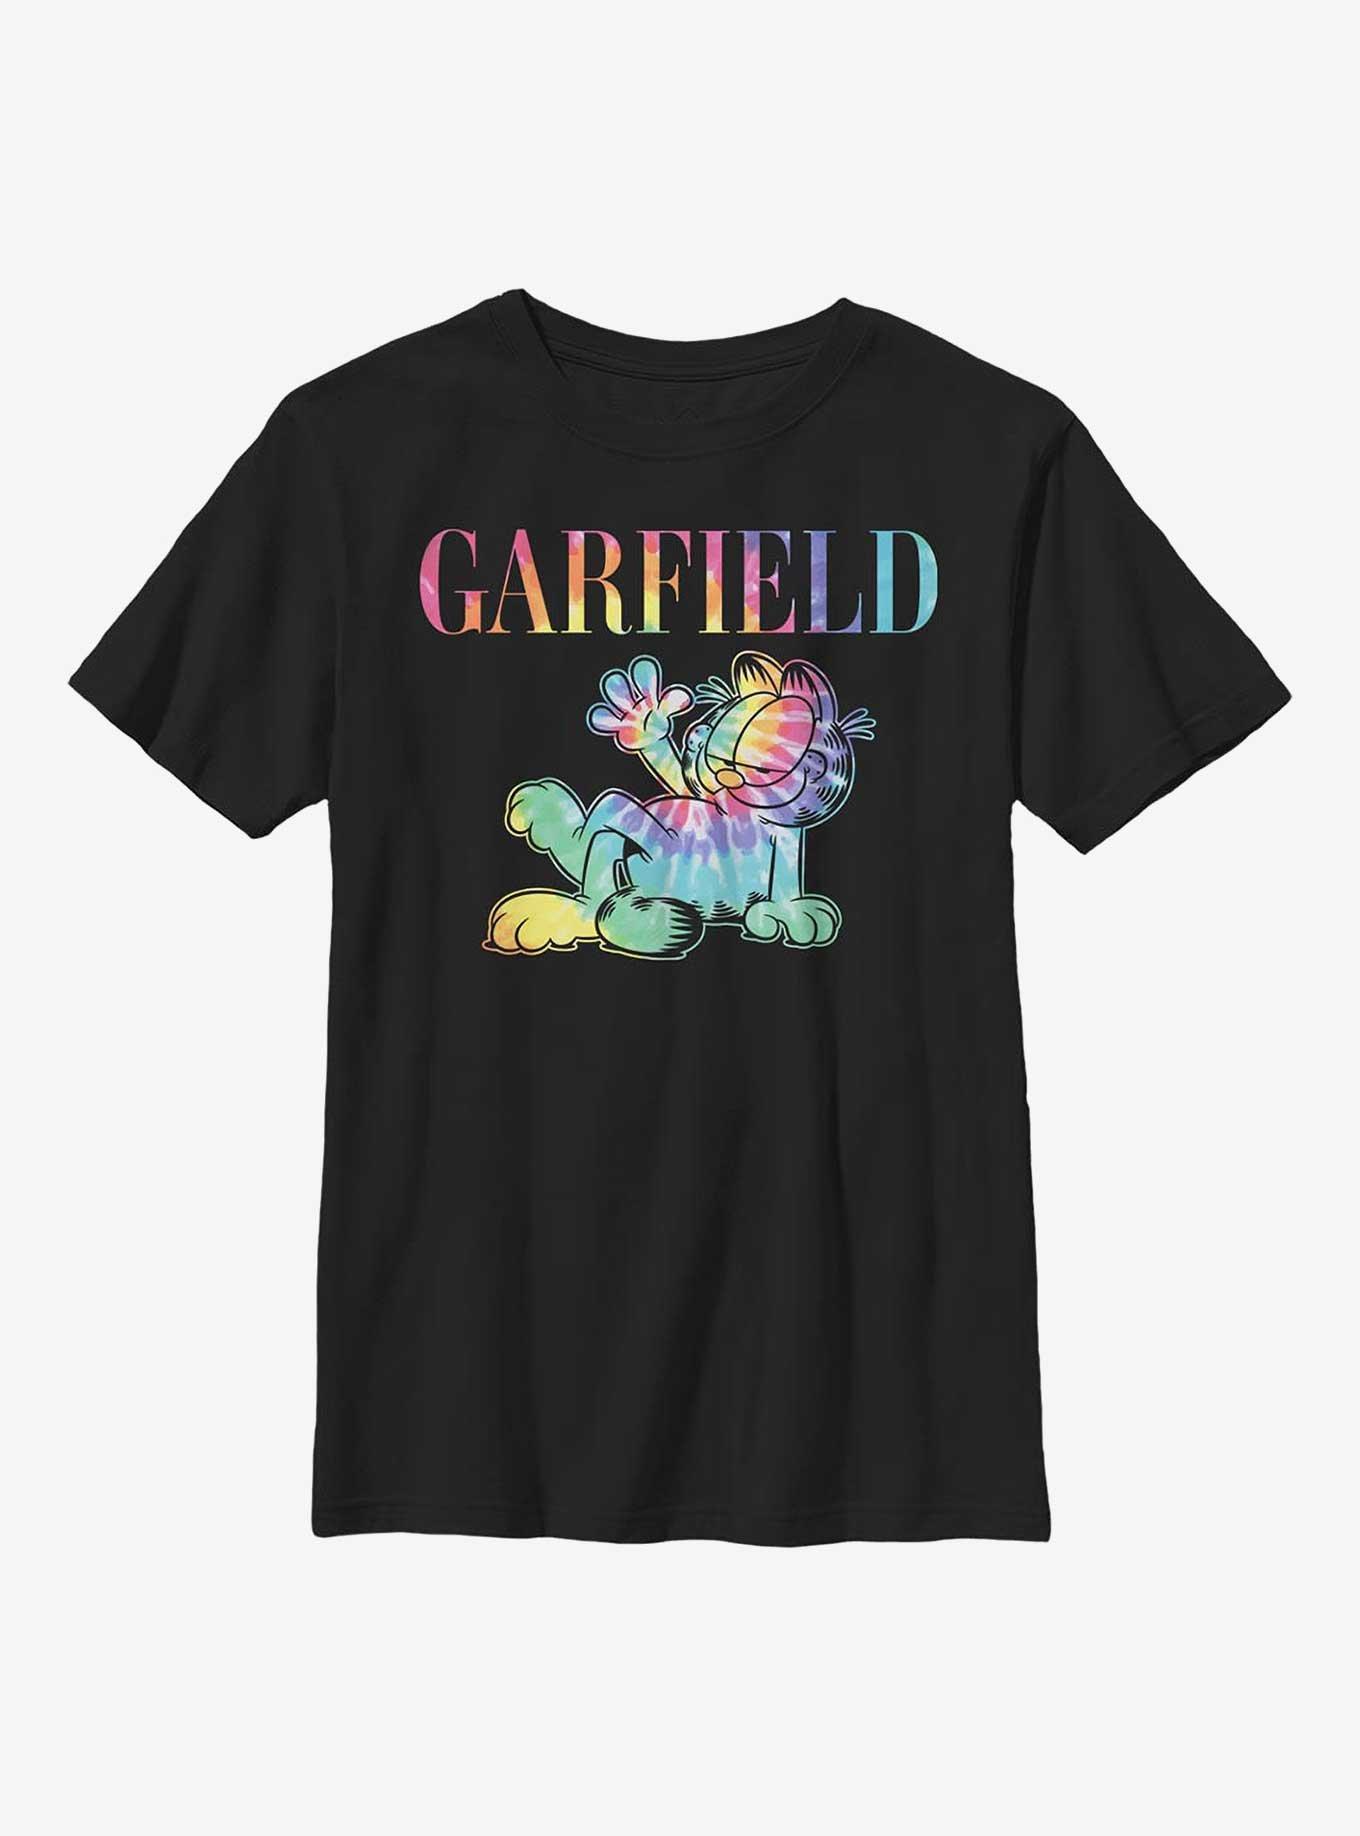 Garfield Tie-Dye Cat Youth T-Shirt, BLACK, hi-res